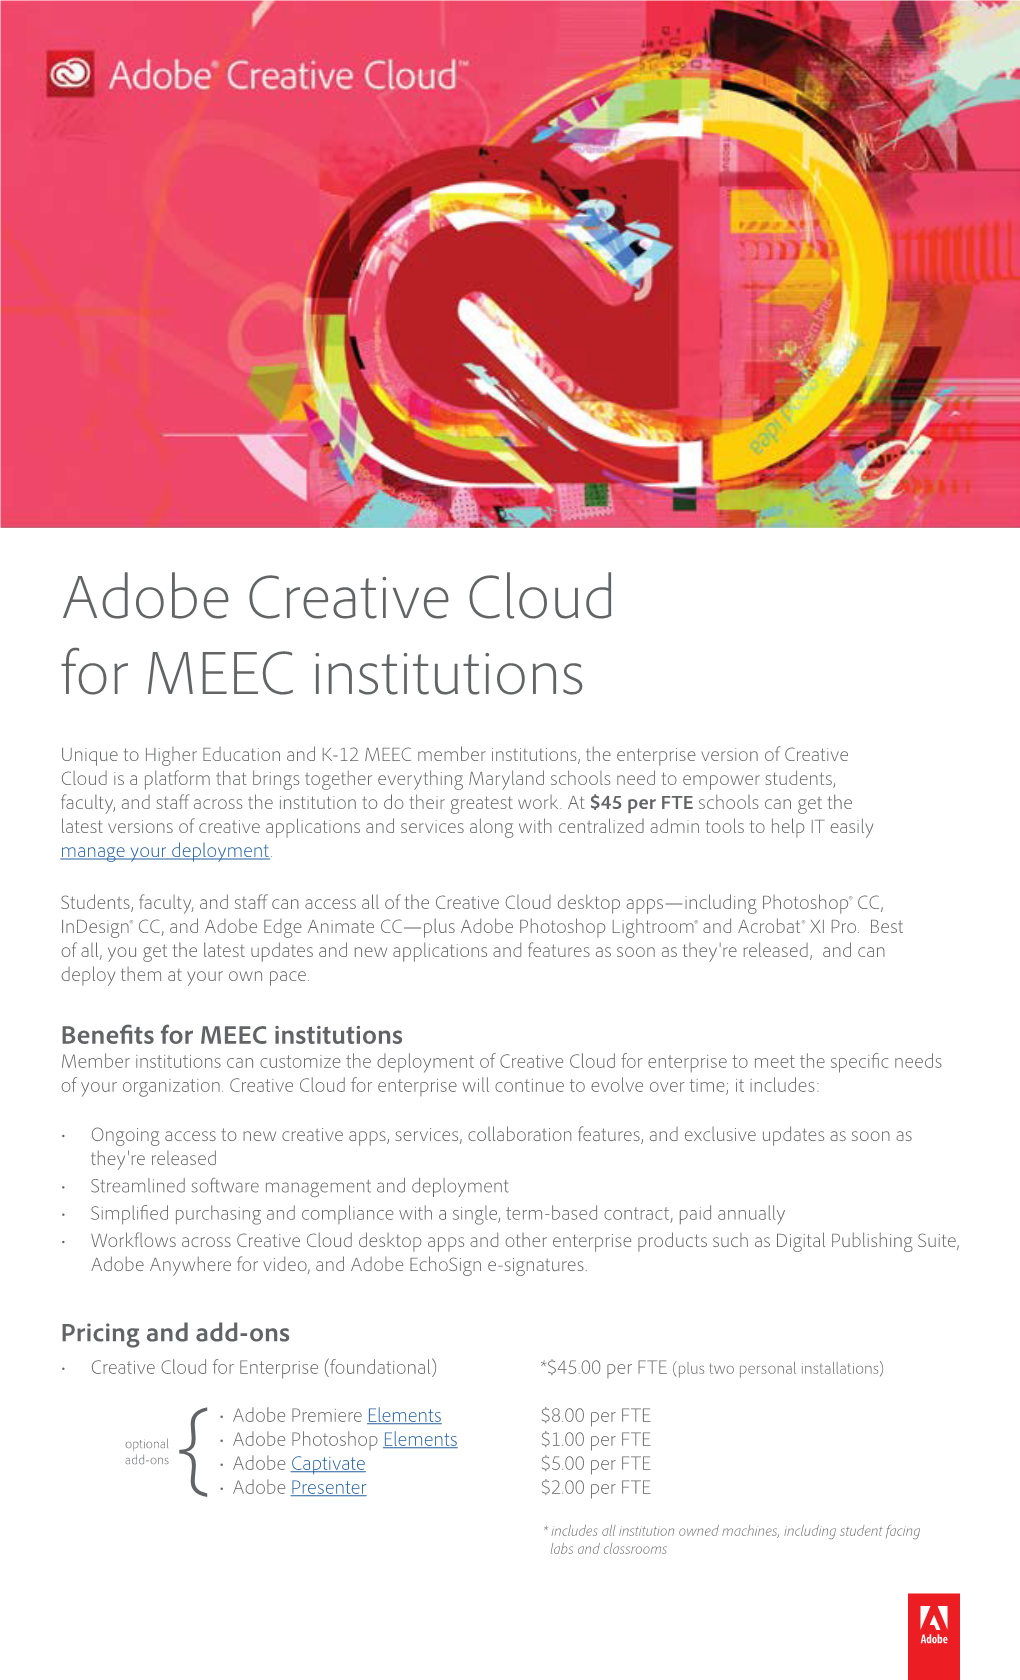 Adobe Creative Cloud for MEEC Institutions